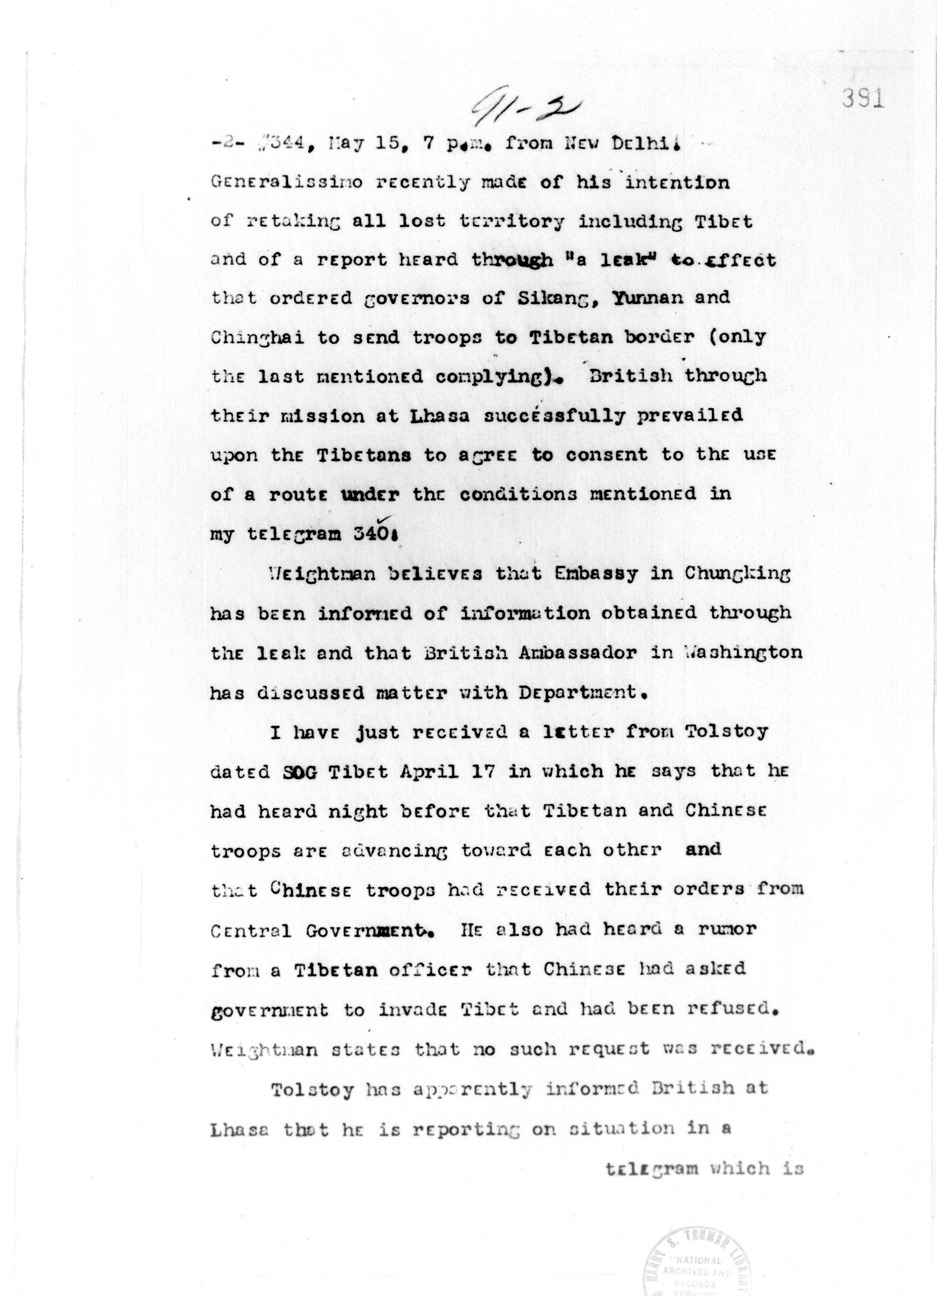 Telegram from George R. Merrell to Secretary of State Cordell Hull